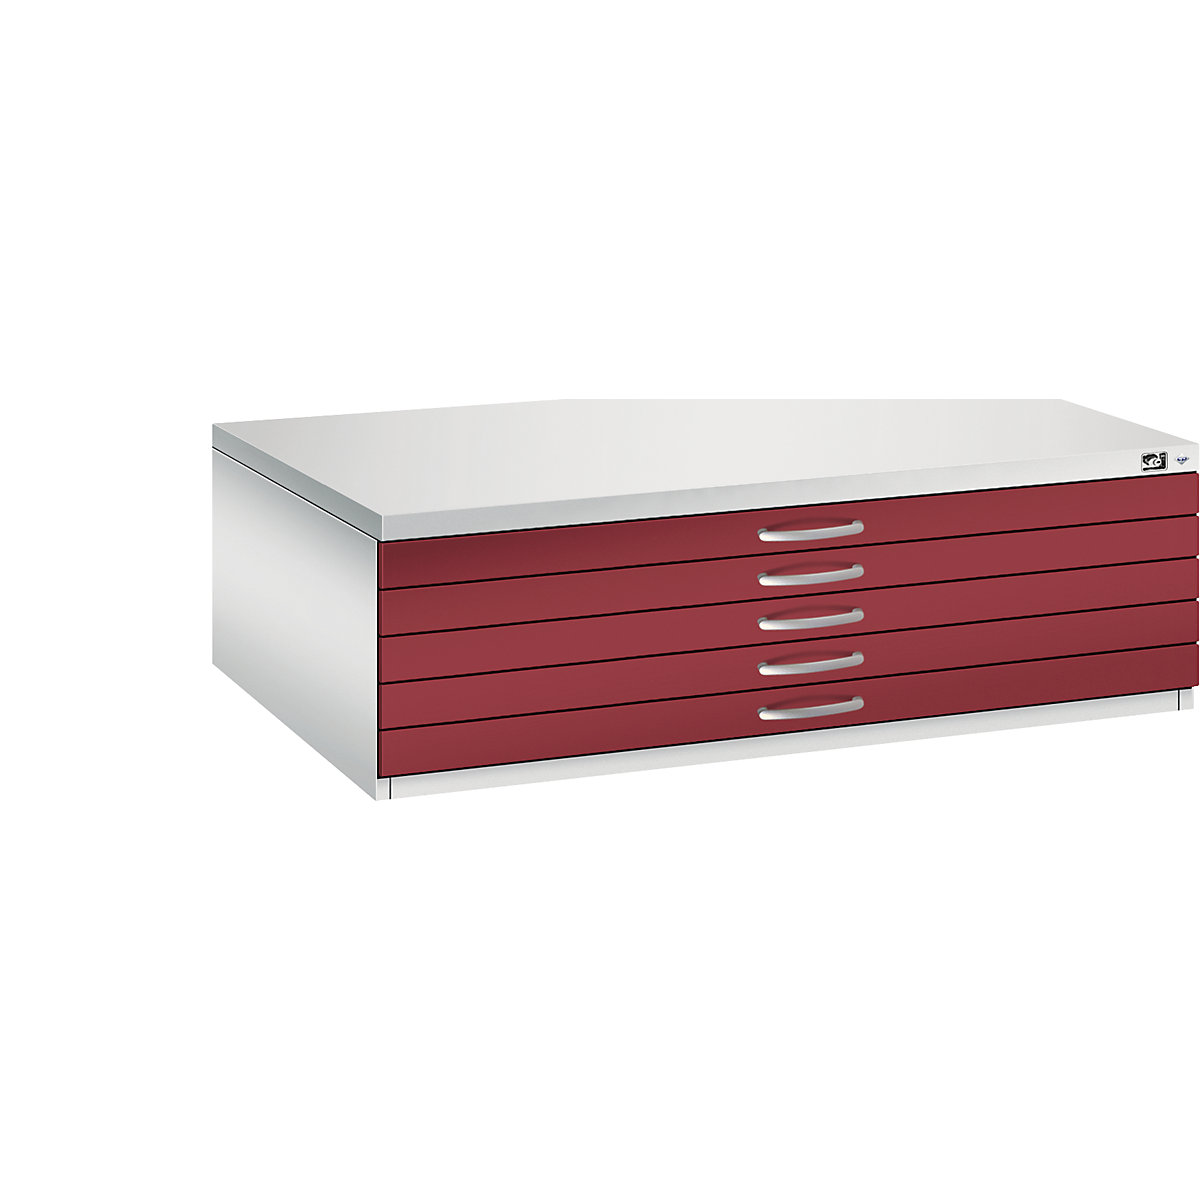 Armario para planos – C+P, DIN A0, 5 cajones, altura 420 mm, gris luminoso / rojo rubí-19